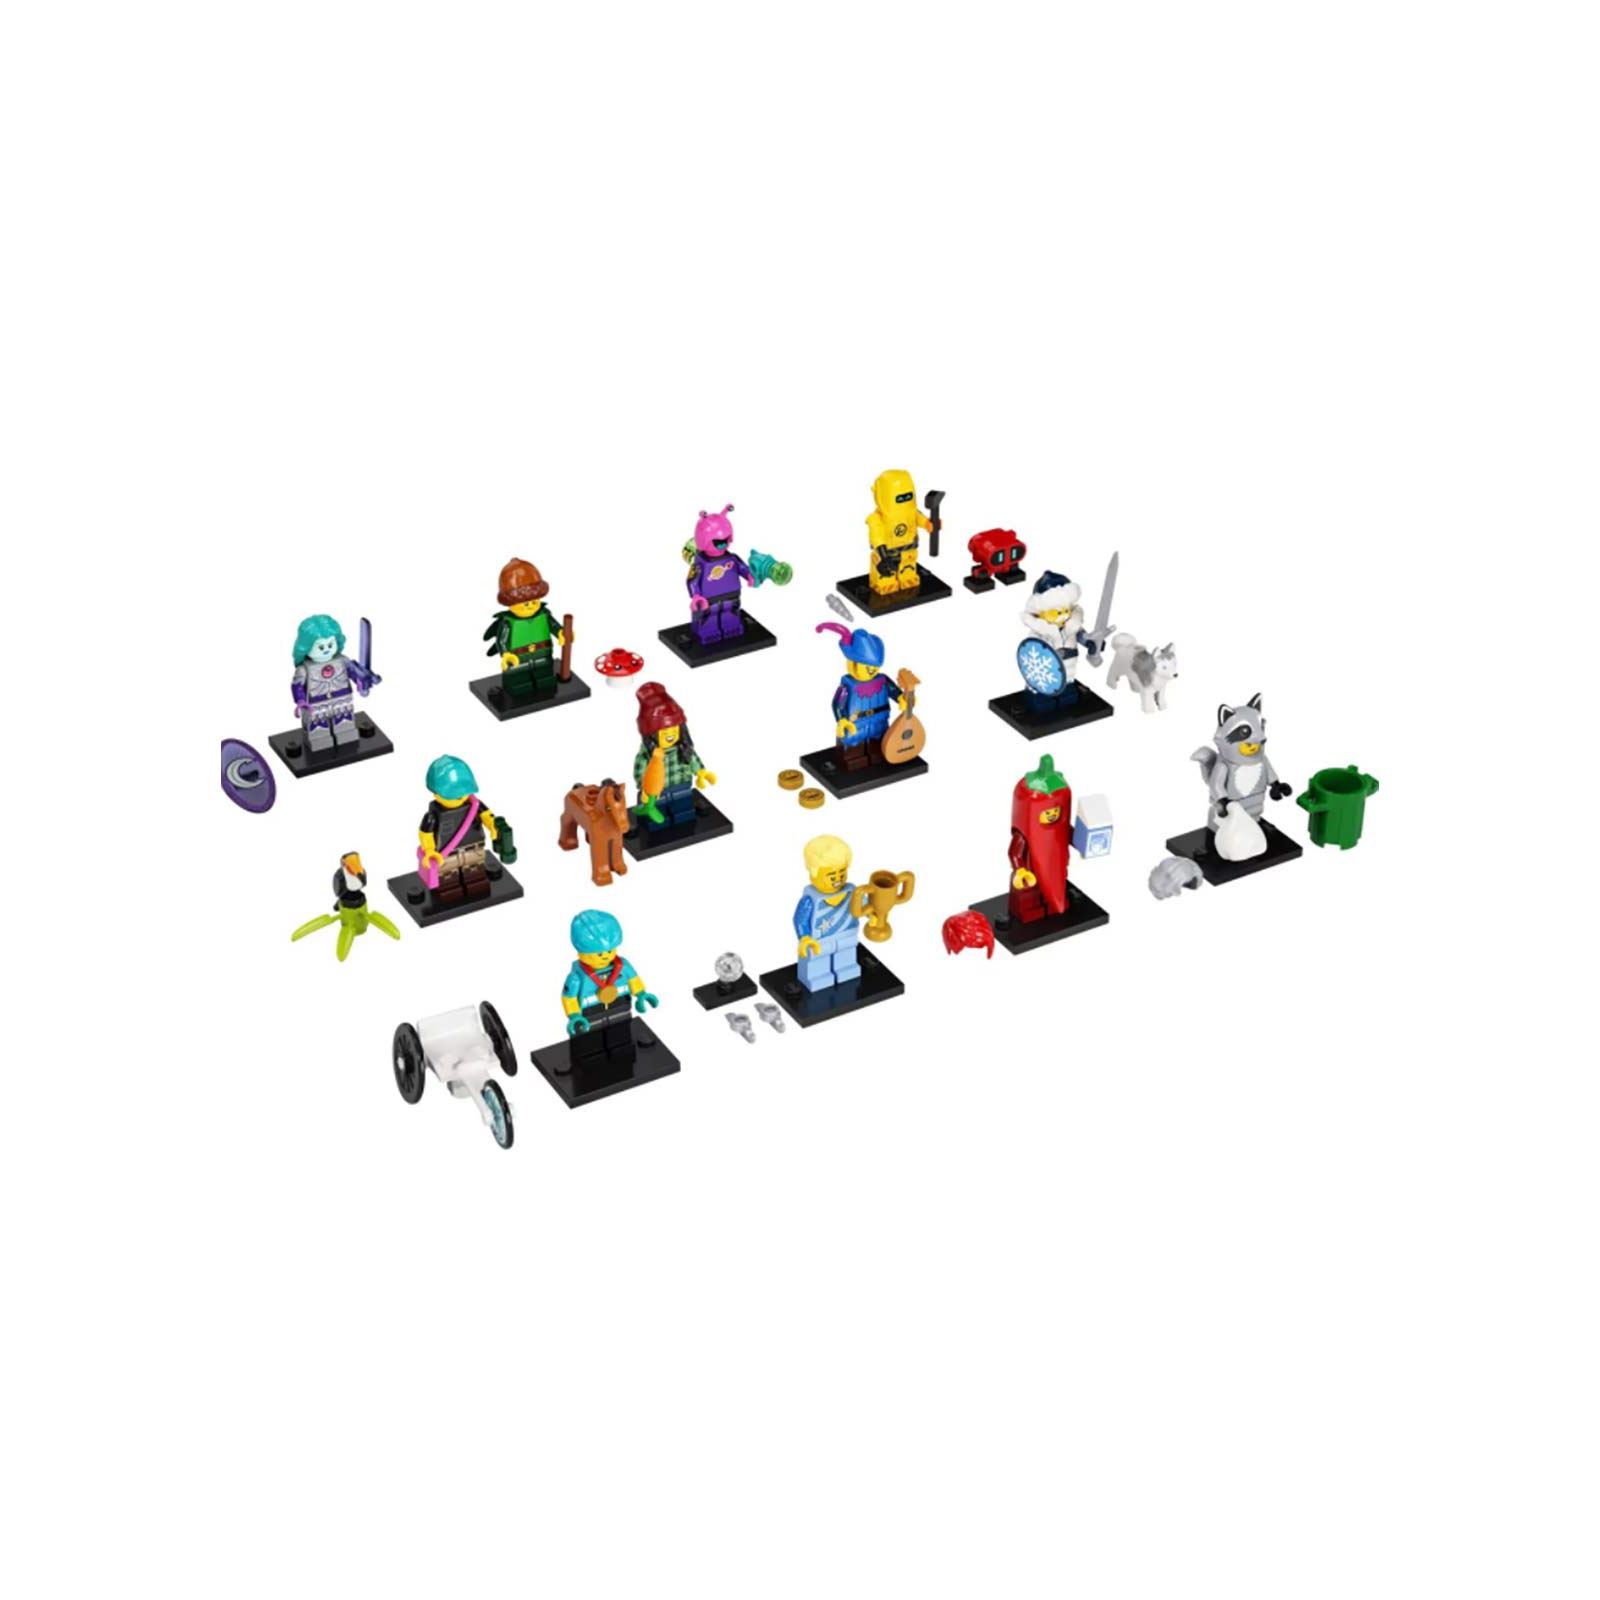 Lego Mini Figürler Seri 22 71032